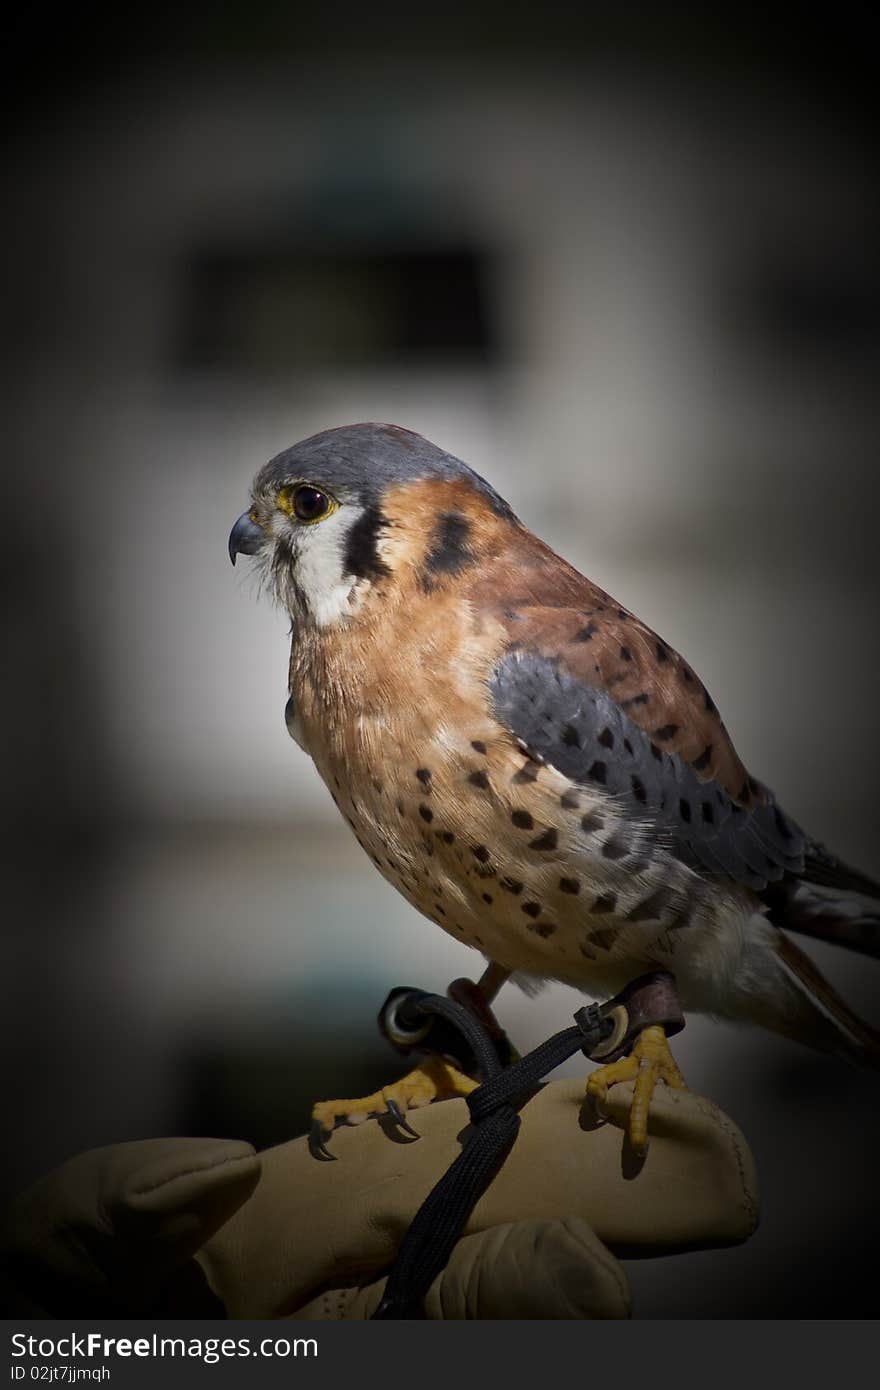 A portrait of a Falcon